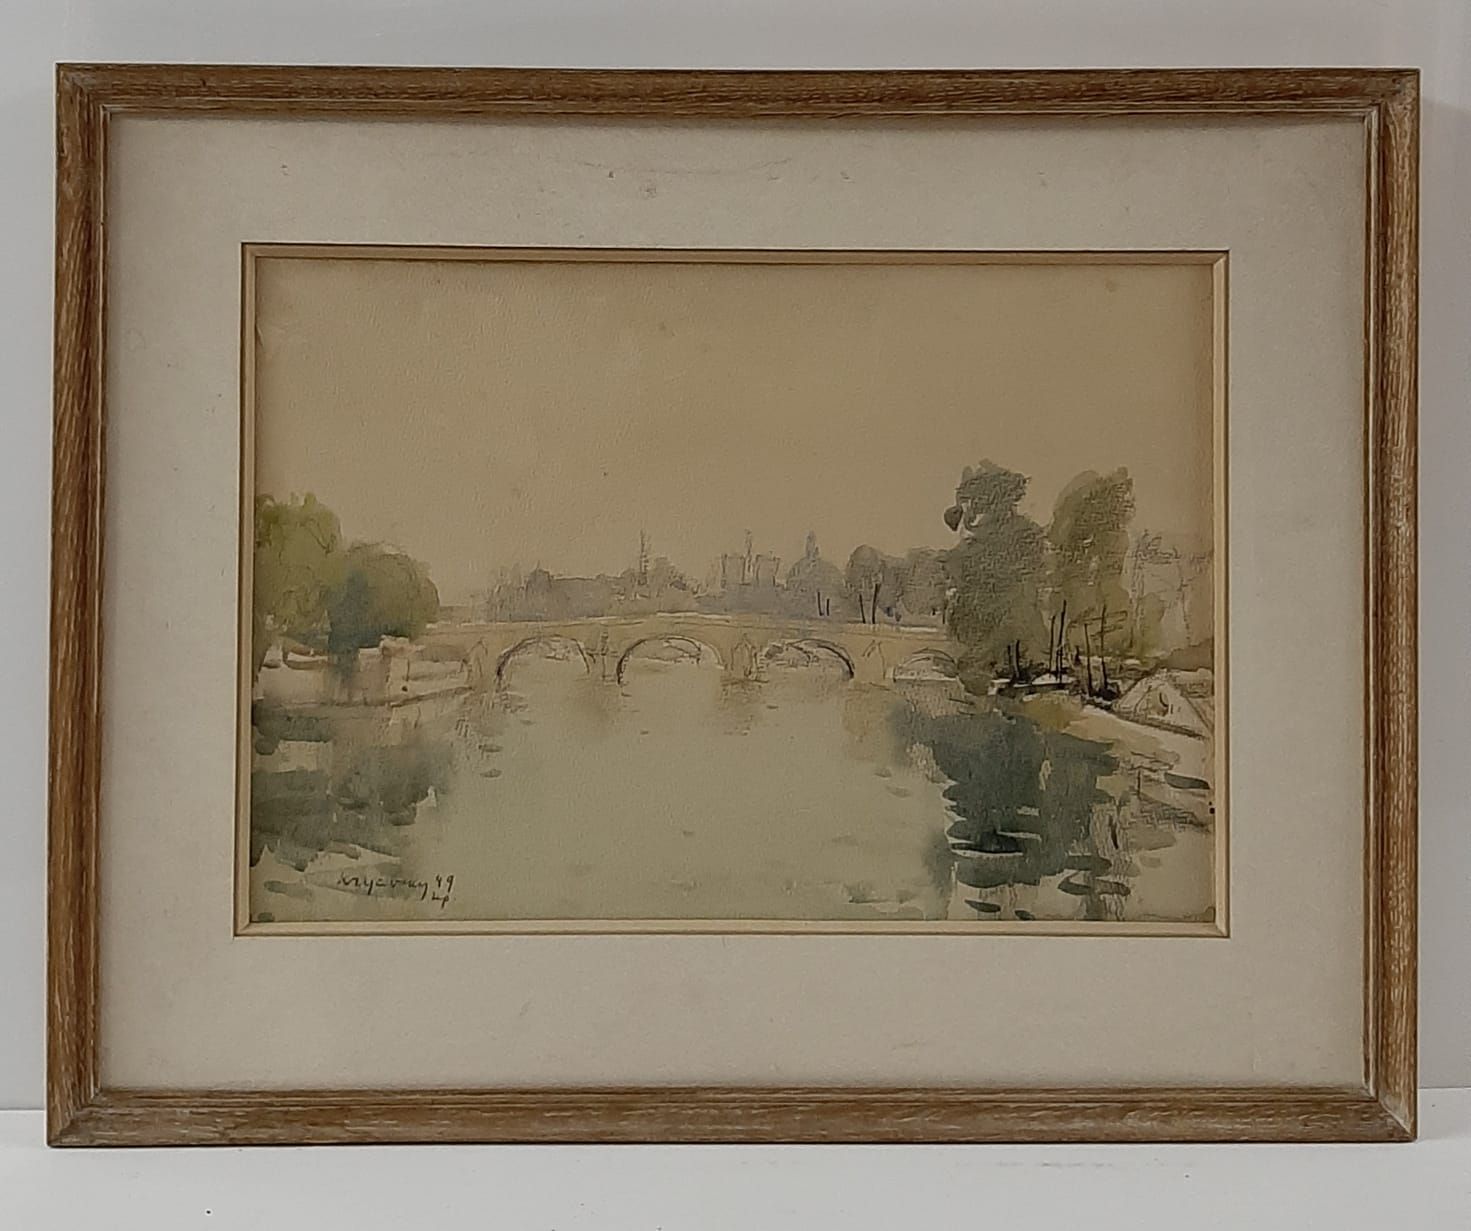 Null 米科拉-瓦西尔-克里切夫斯基(1898-1961)

塞纳河畔

水彩画

左下方有签名

30 x 46 厘米